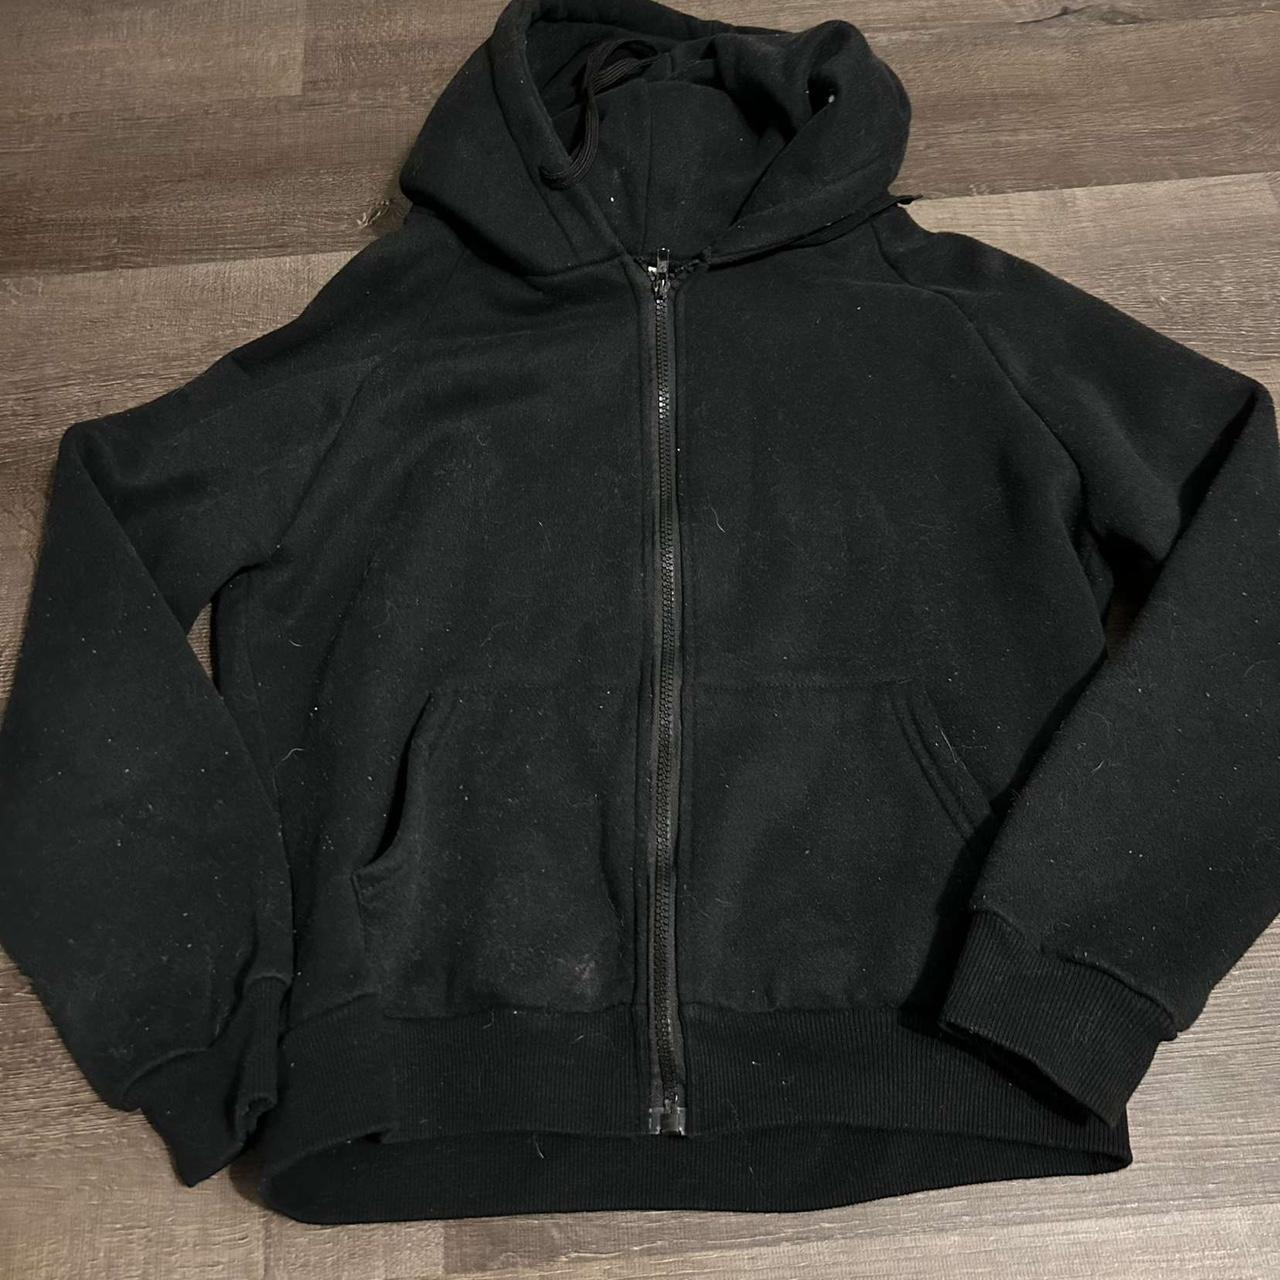 black basic zip up hoodie. size s. no tag so not... - Depop